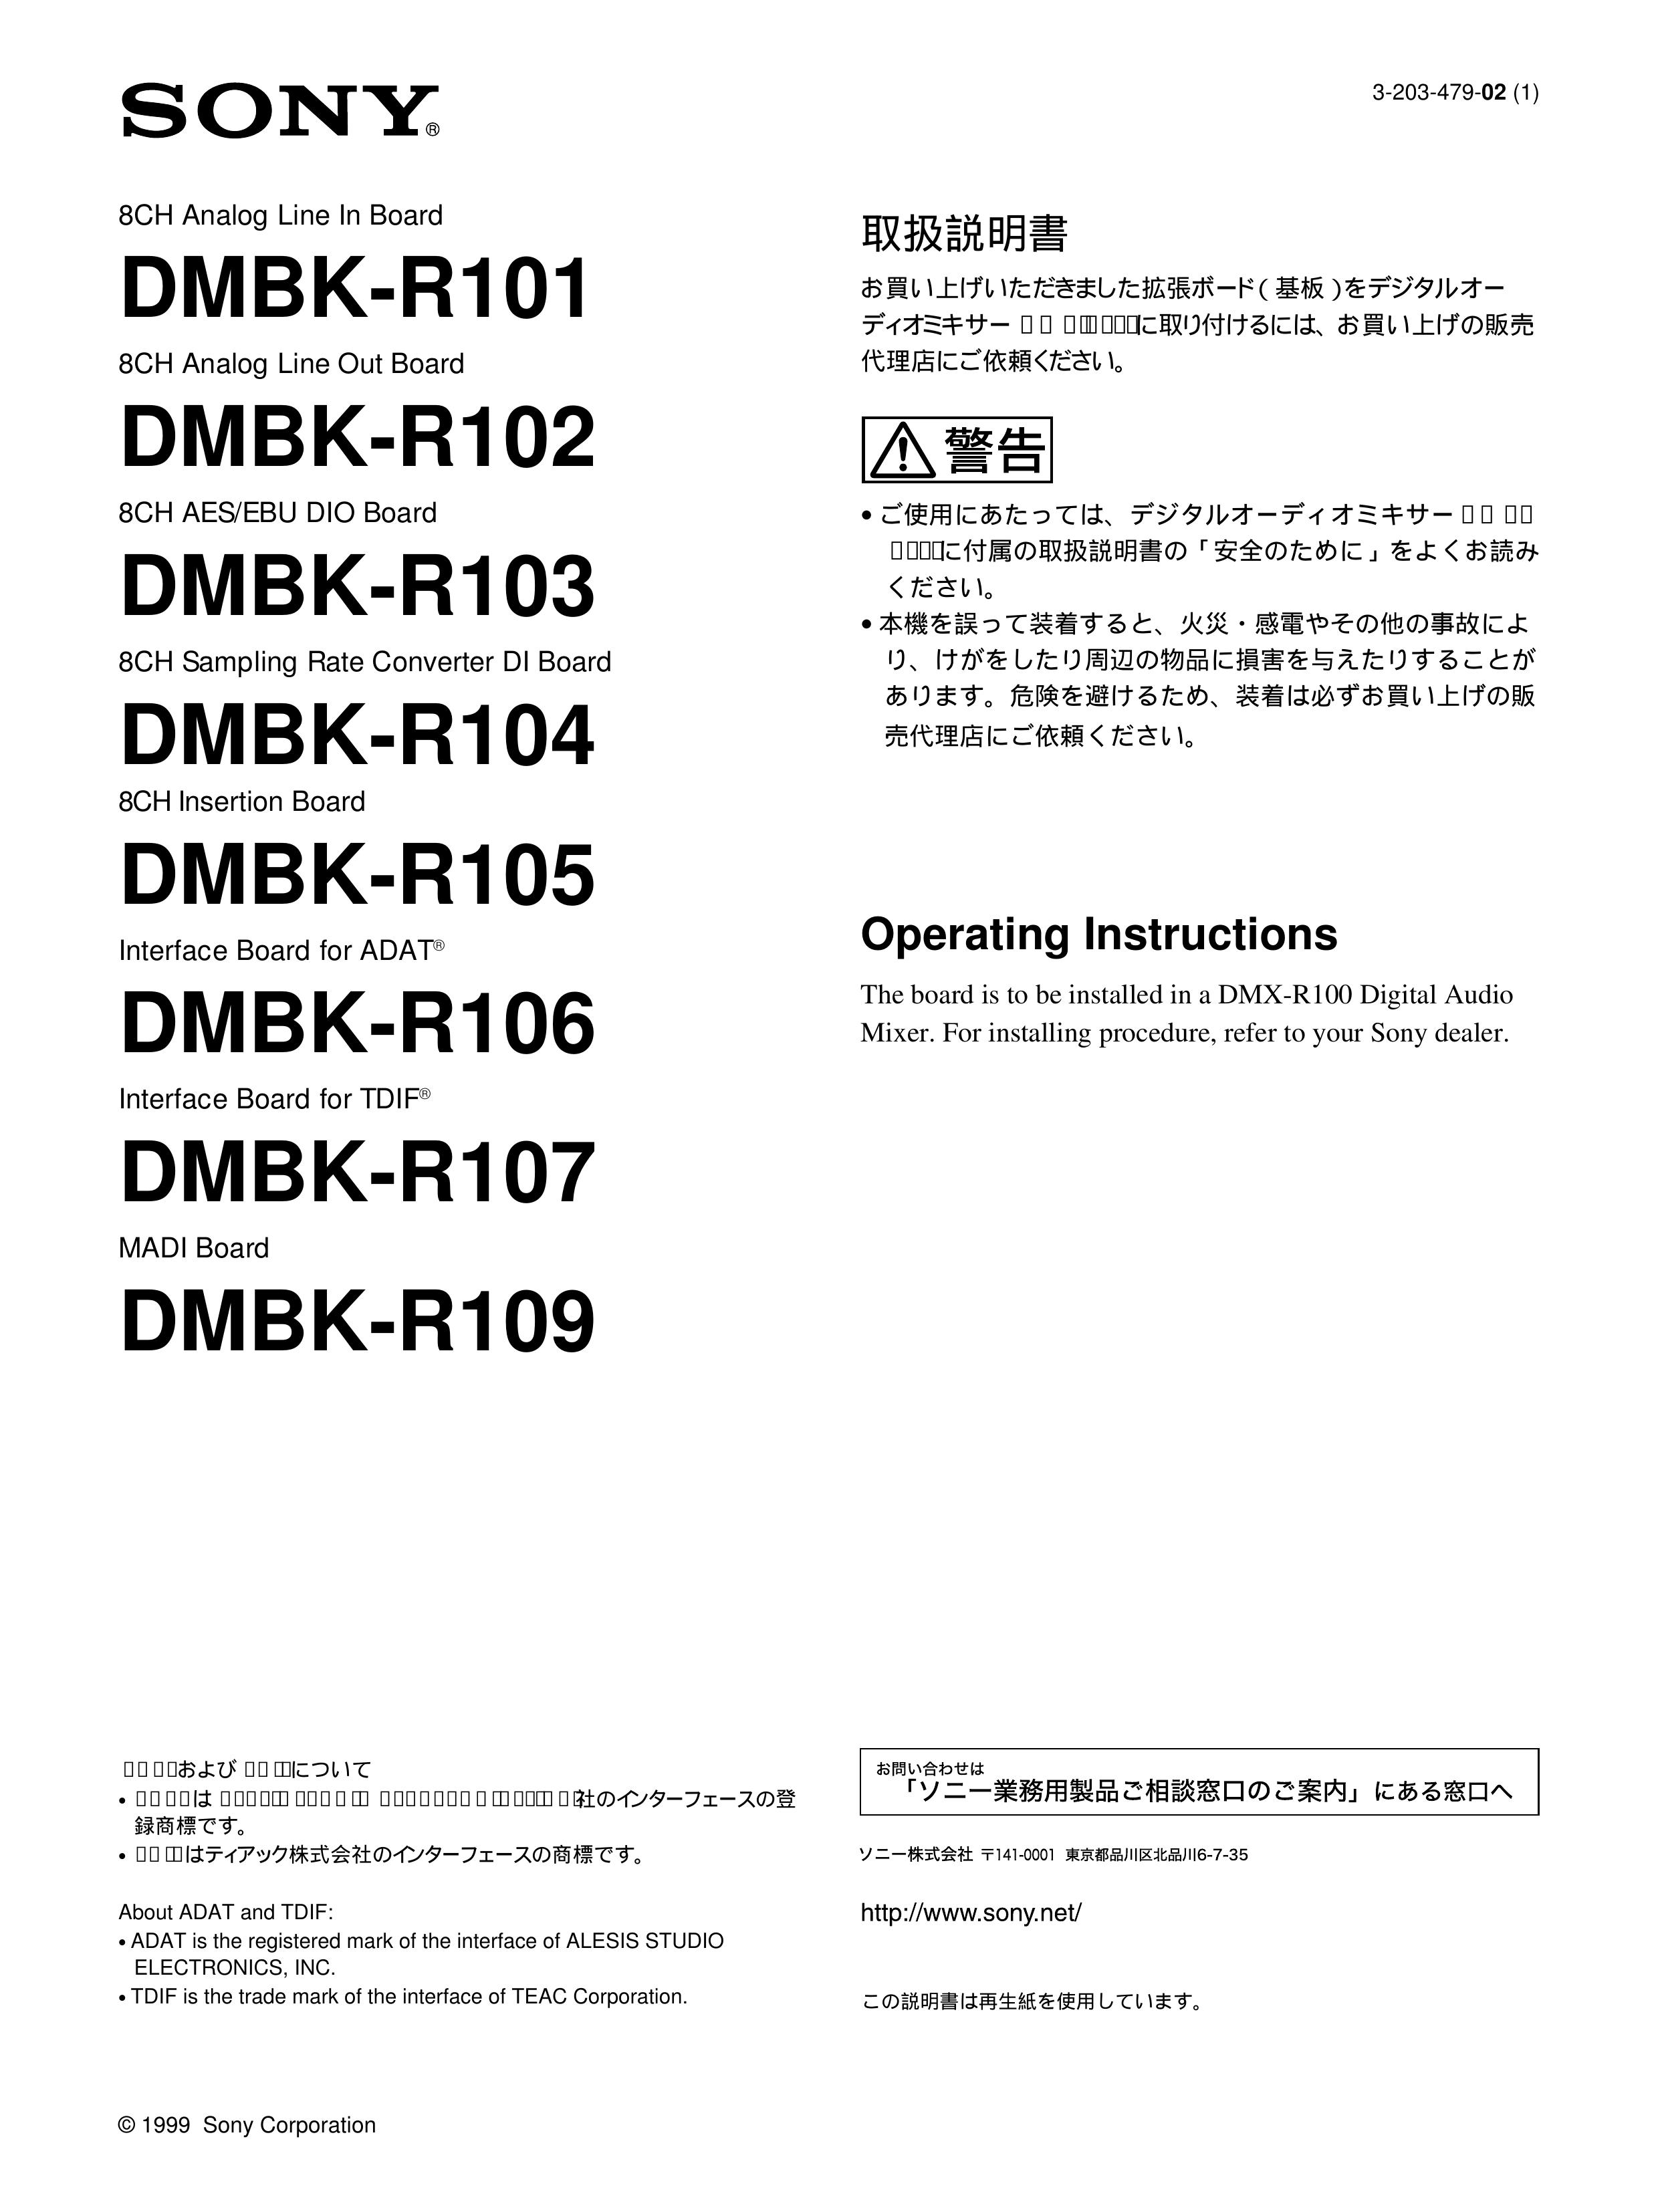 Sony DMBK-R106 Music Mixer User Manual